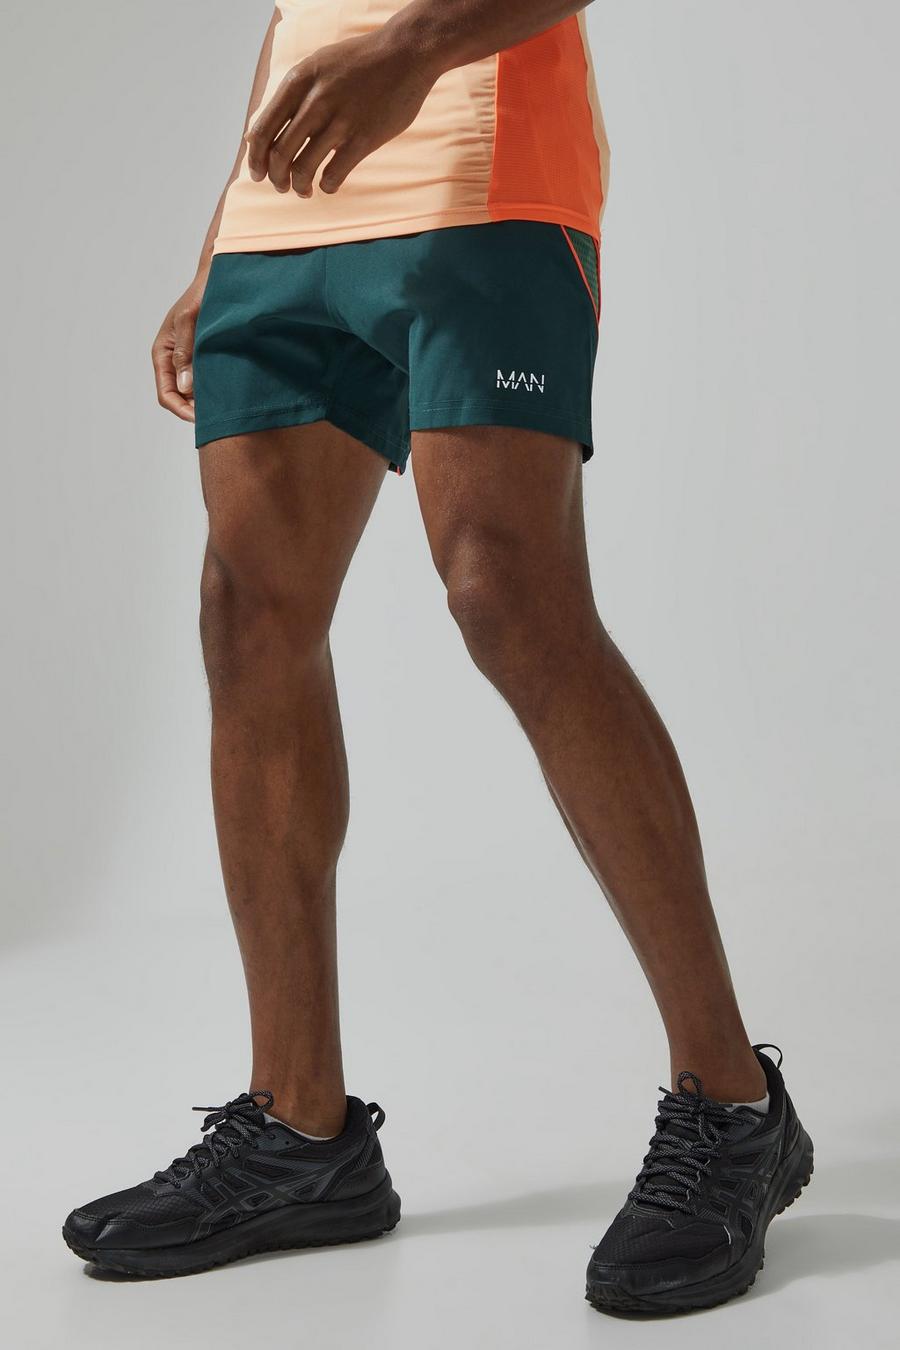 Man Active strukturierte Colorblock Mesh-Shorts, Teal